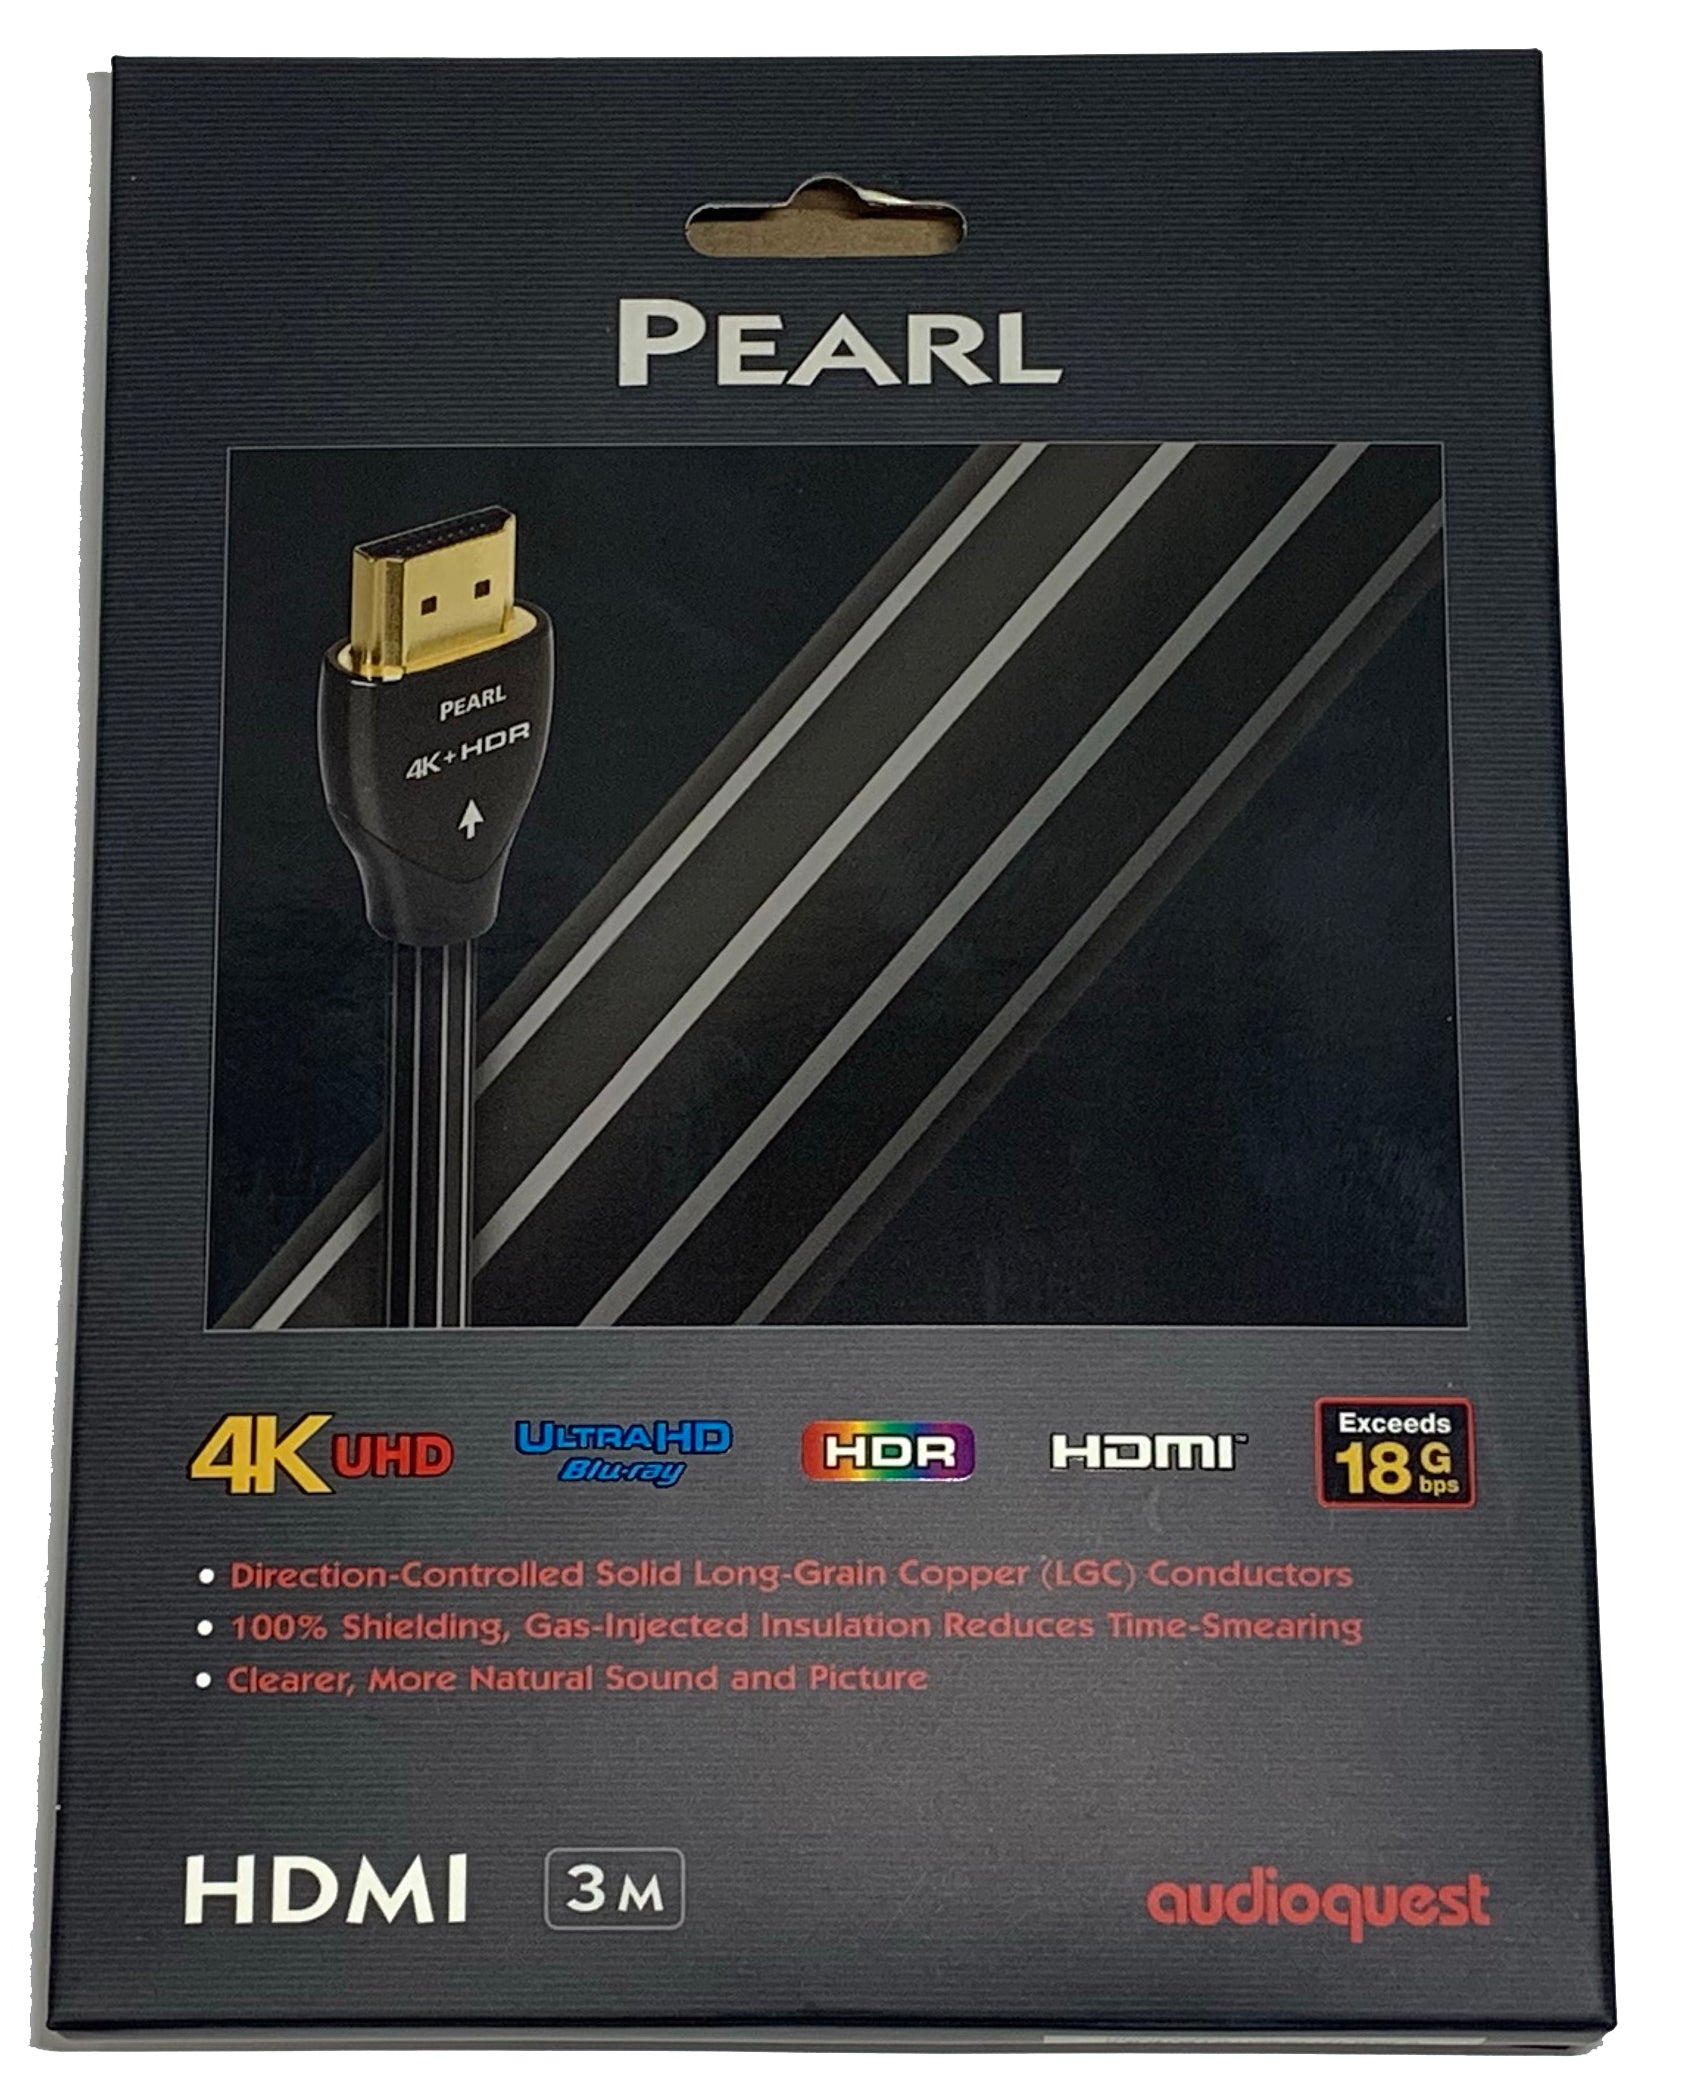 AudioQuest Pearl HDMI 4K UHD HDR 3m (10')